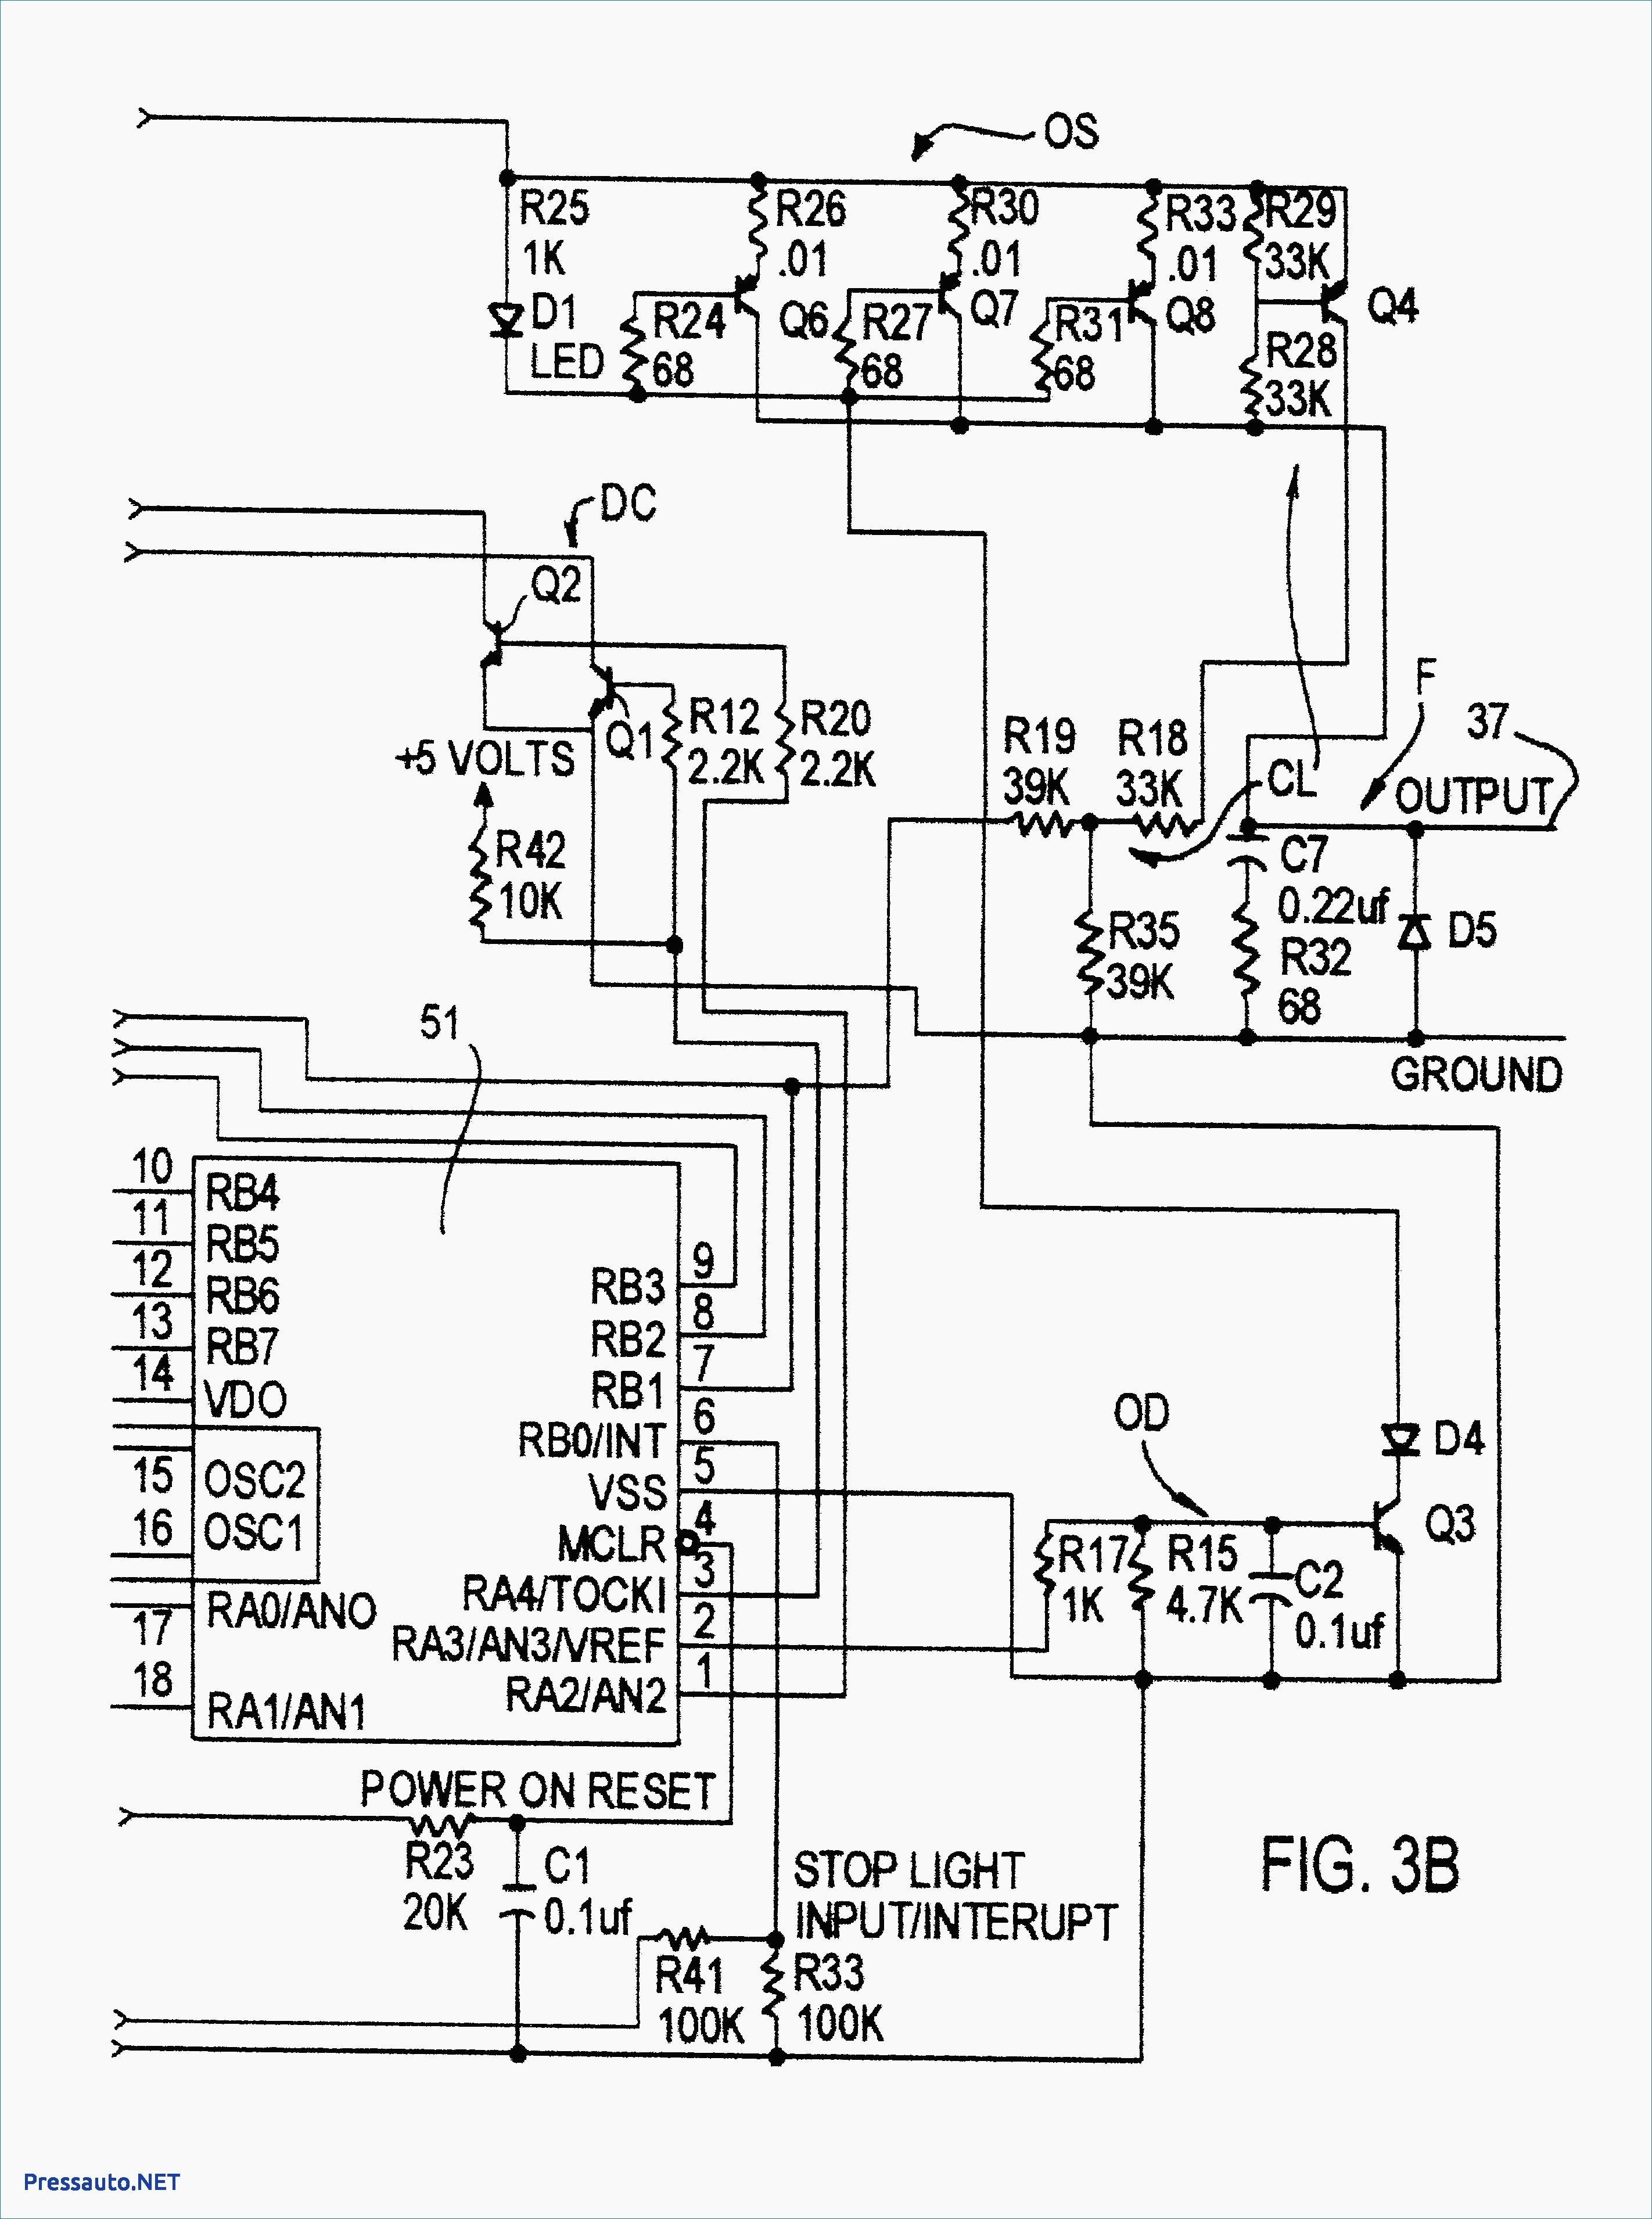 Electrical Plugs In Series Wiring Diagram Diagrams Electric Range Outlet Wiring Diagram Auto Diagrams